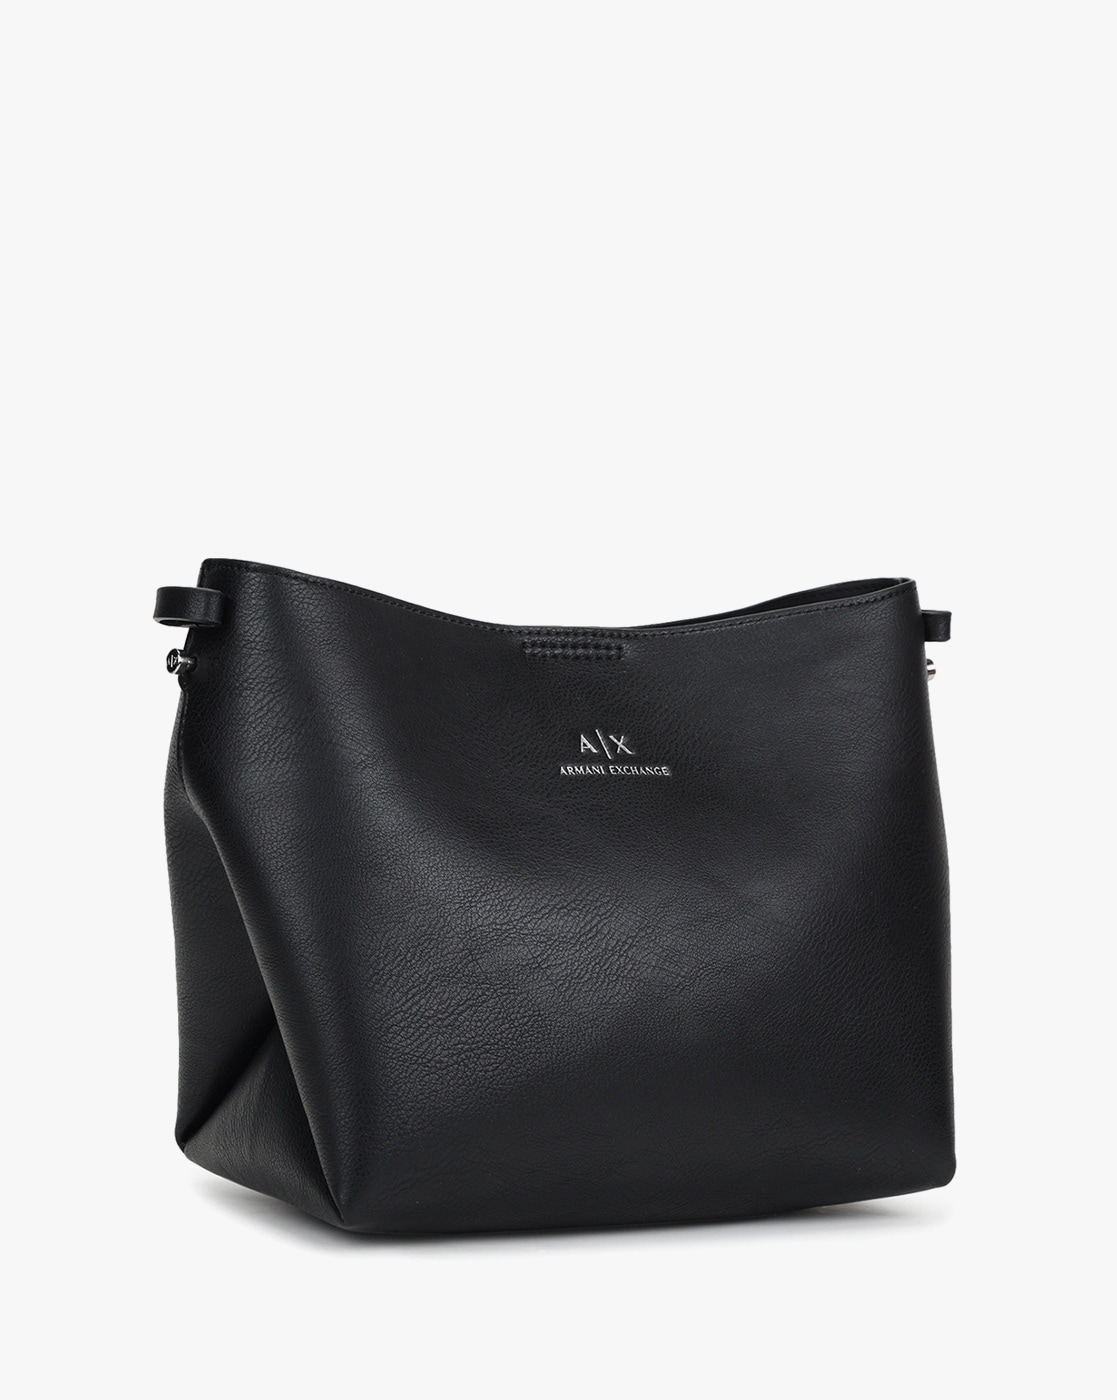 Armani Exchange leather zip round purse in black | ASOS